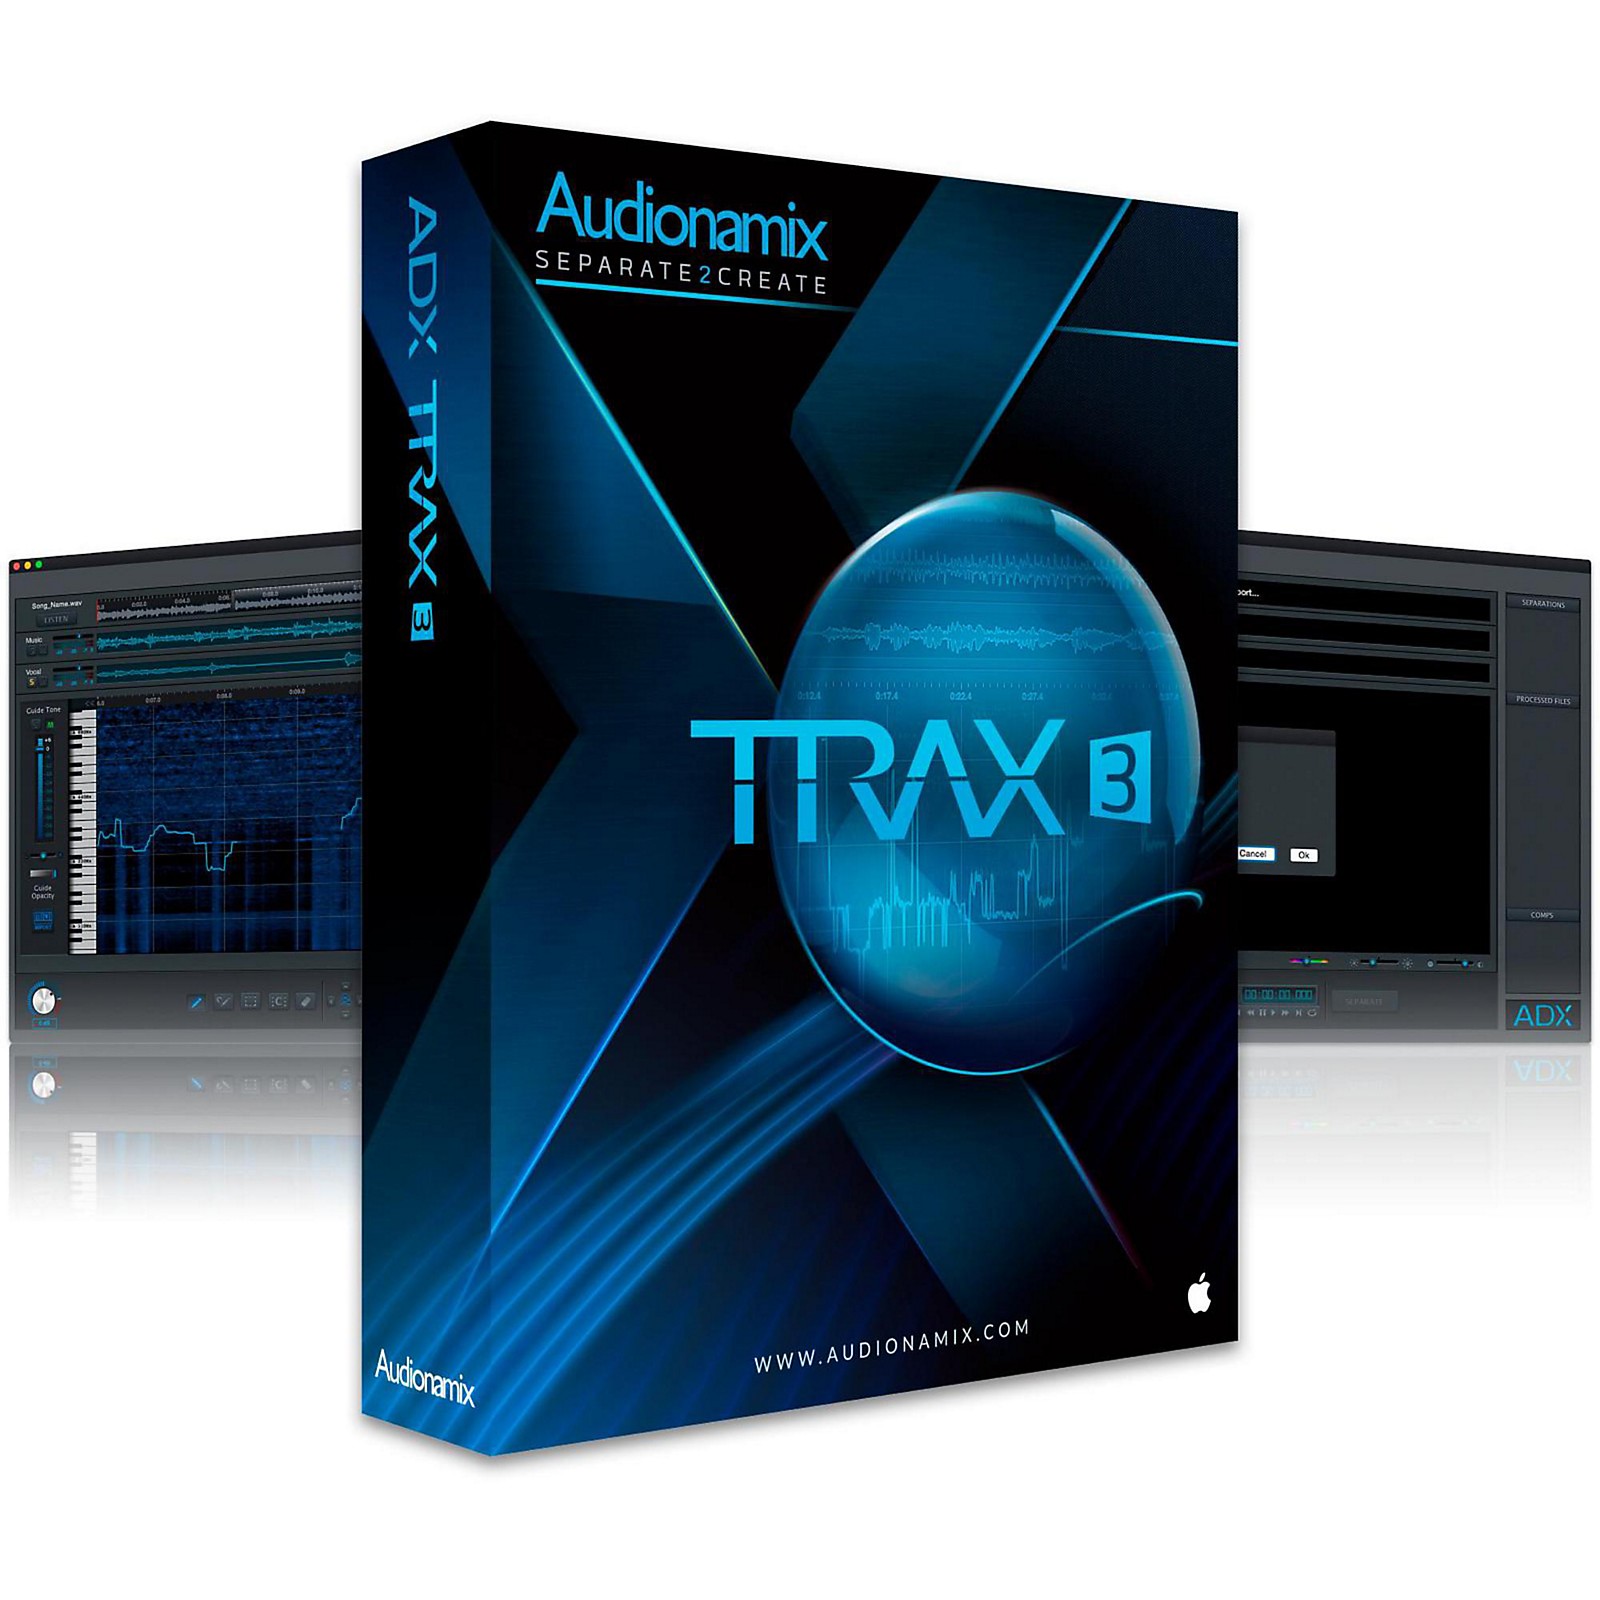 Adx dvd audio sound effects separation software mac free